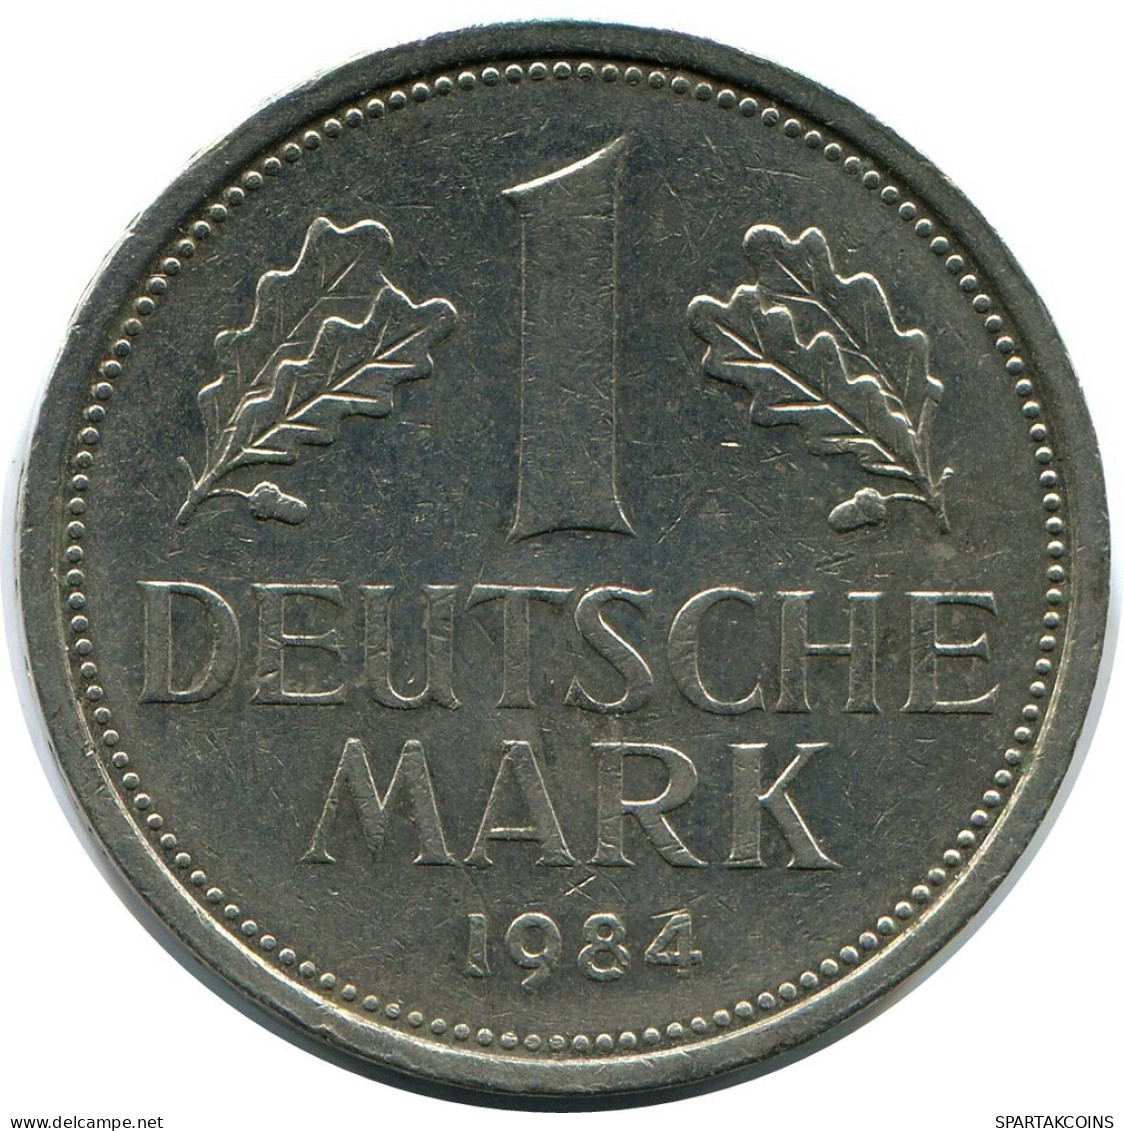 1 DM 1984 D WEST & UNIFIED GERMANY Coin #AZ445.U.A - 1 Mark